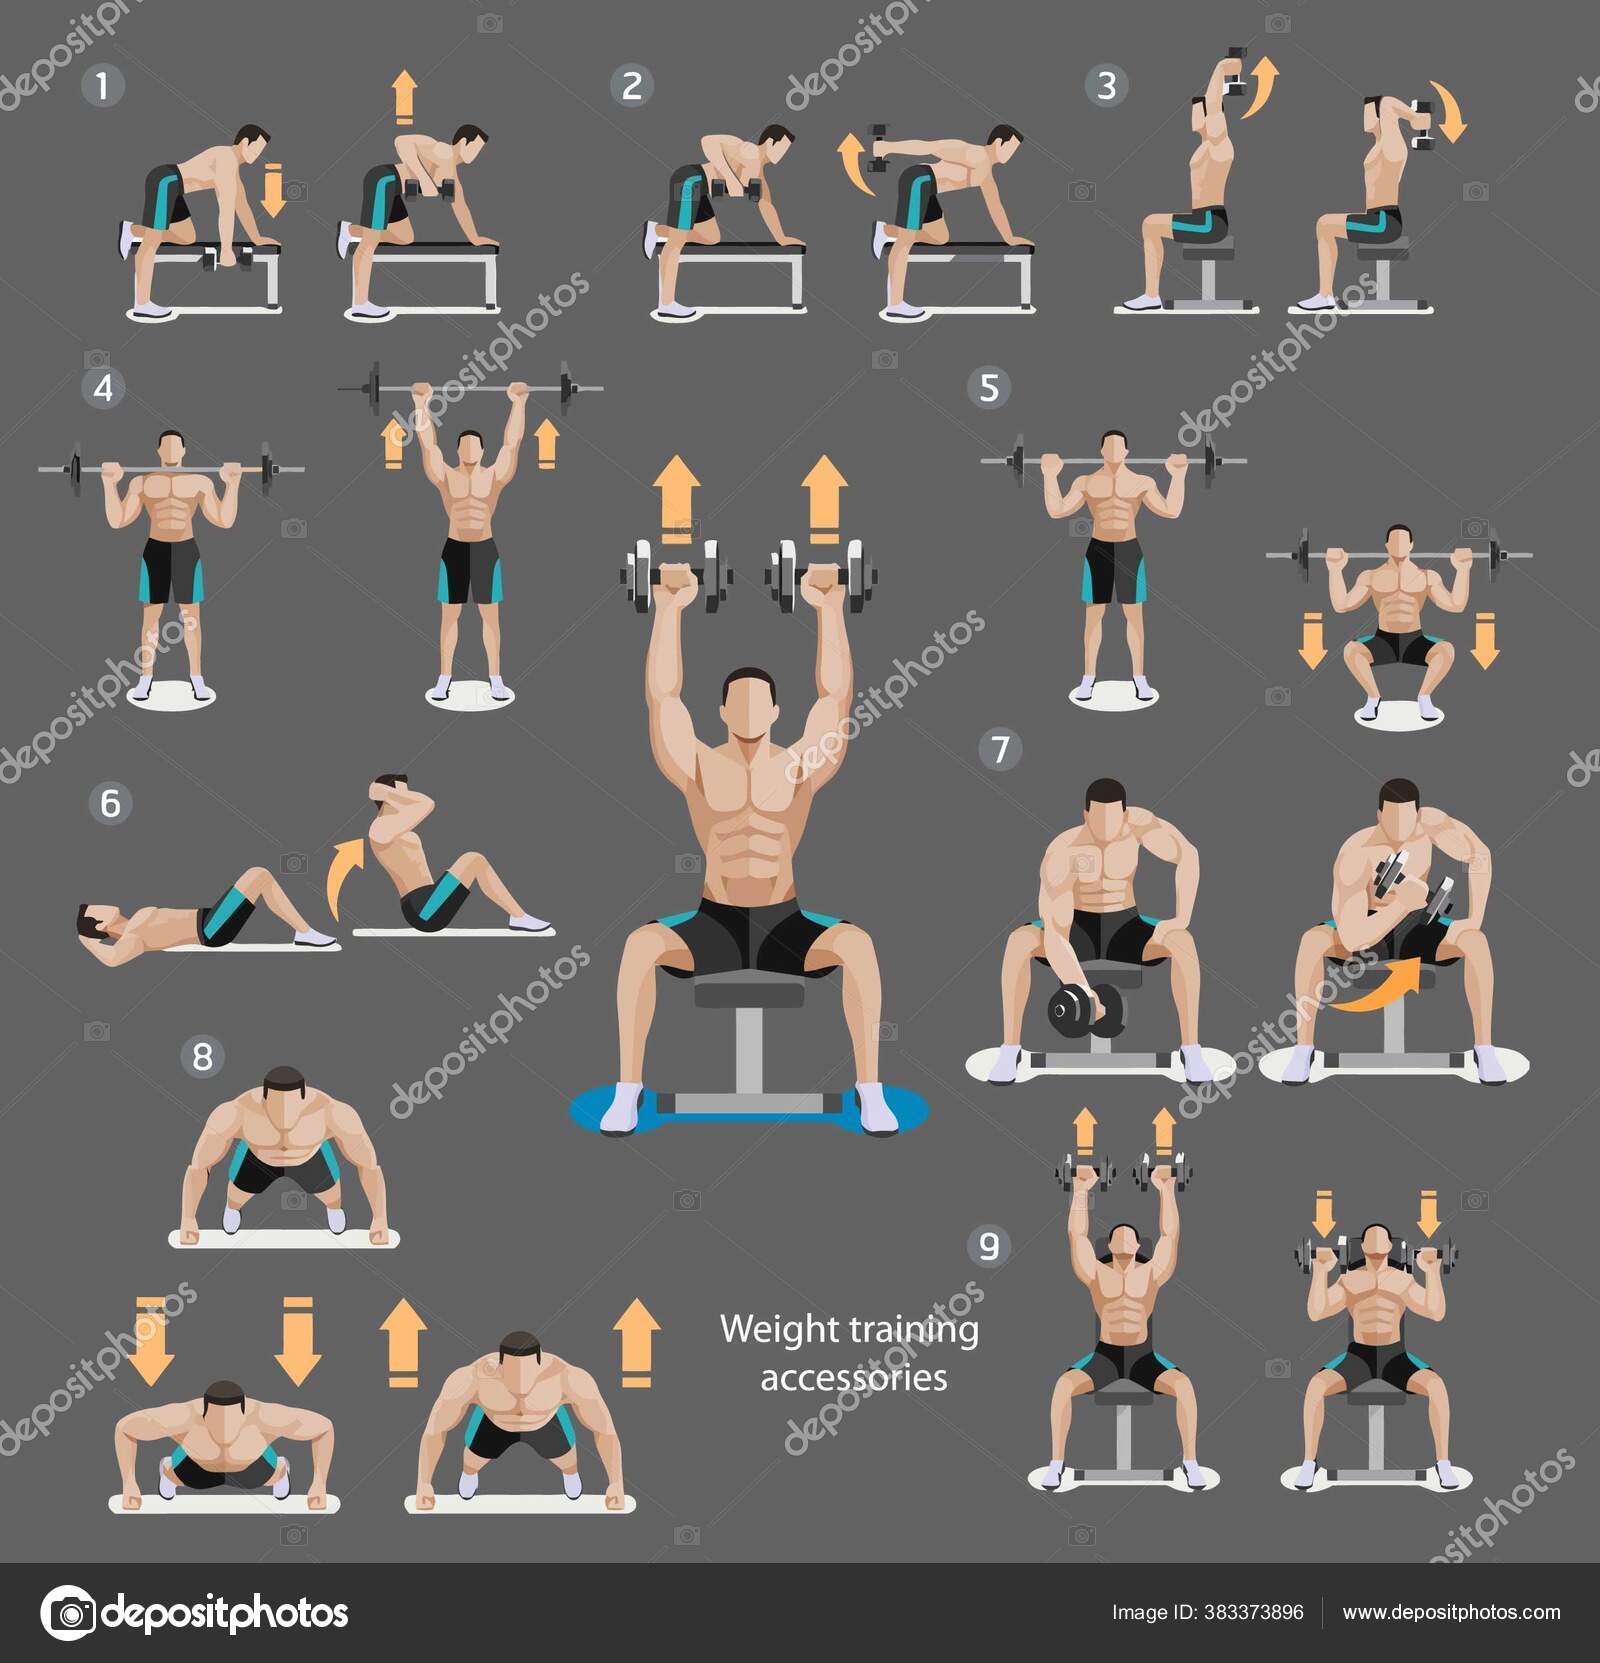 https://st4.depositphotos.com/34587652/38337/v/1600/depositphotos_383373896-stock-illustration-male-fitness-weight-training-accessories.jpg